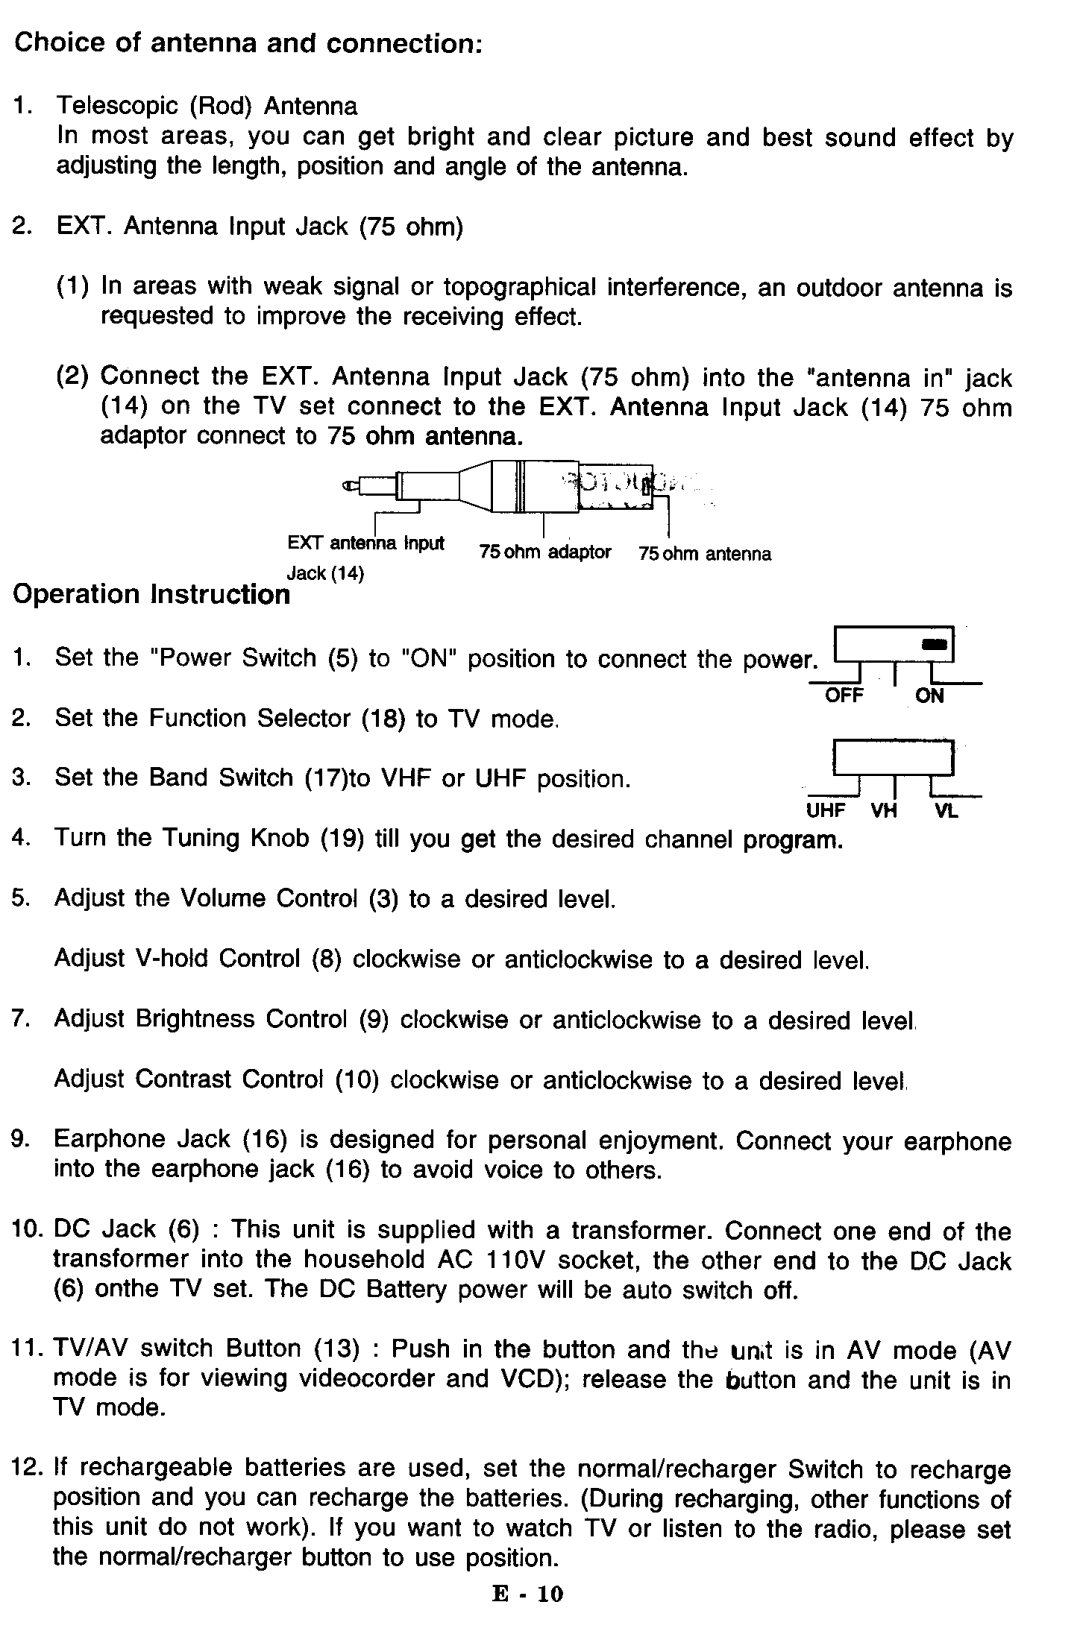 Memorex MPT -3460 manual ~~:cjr,--l~rI-r-~~j l, Choice of antenna and connection, E.I0 